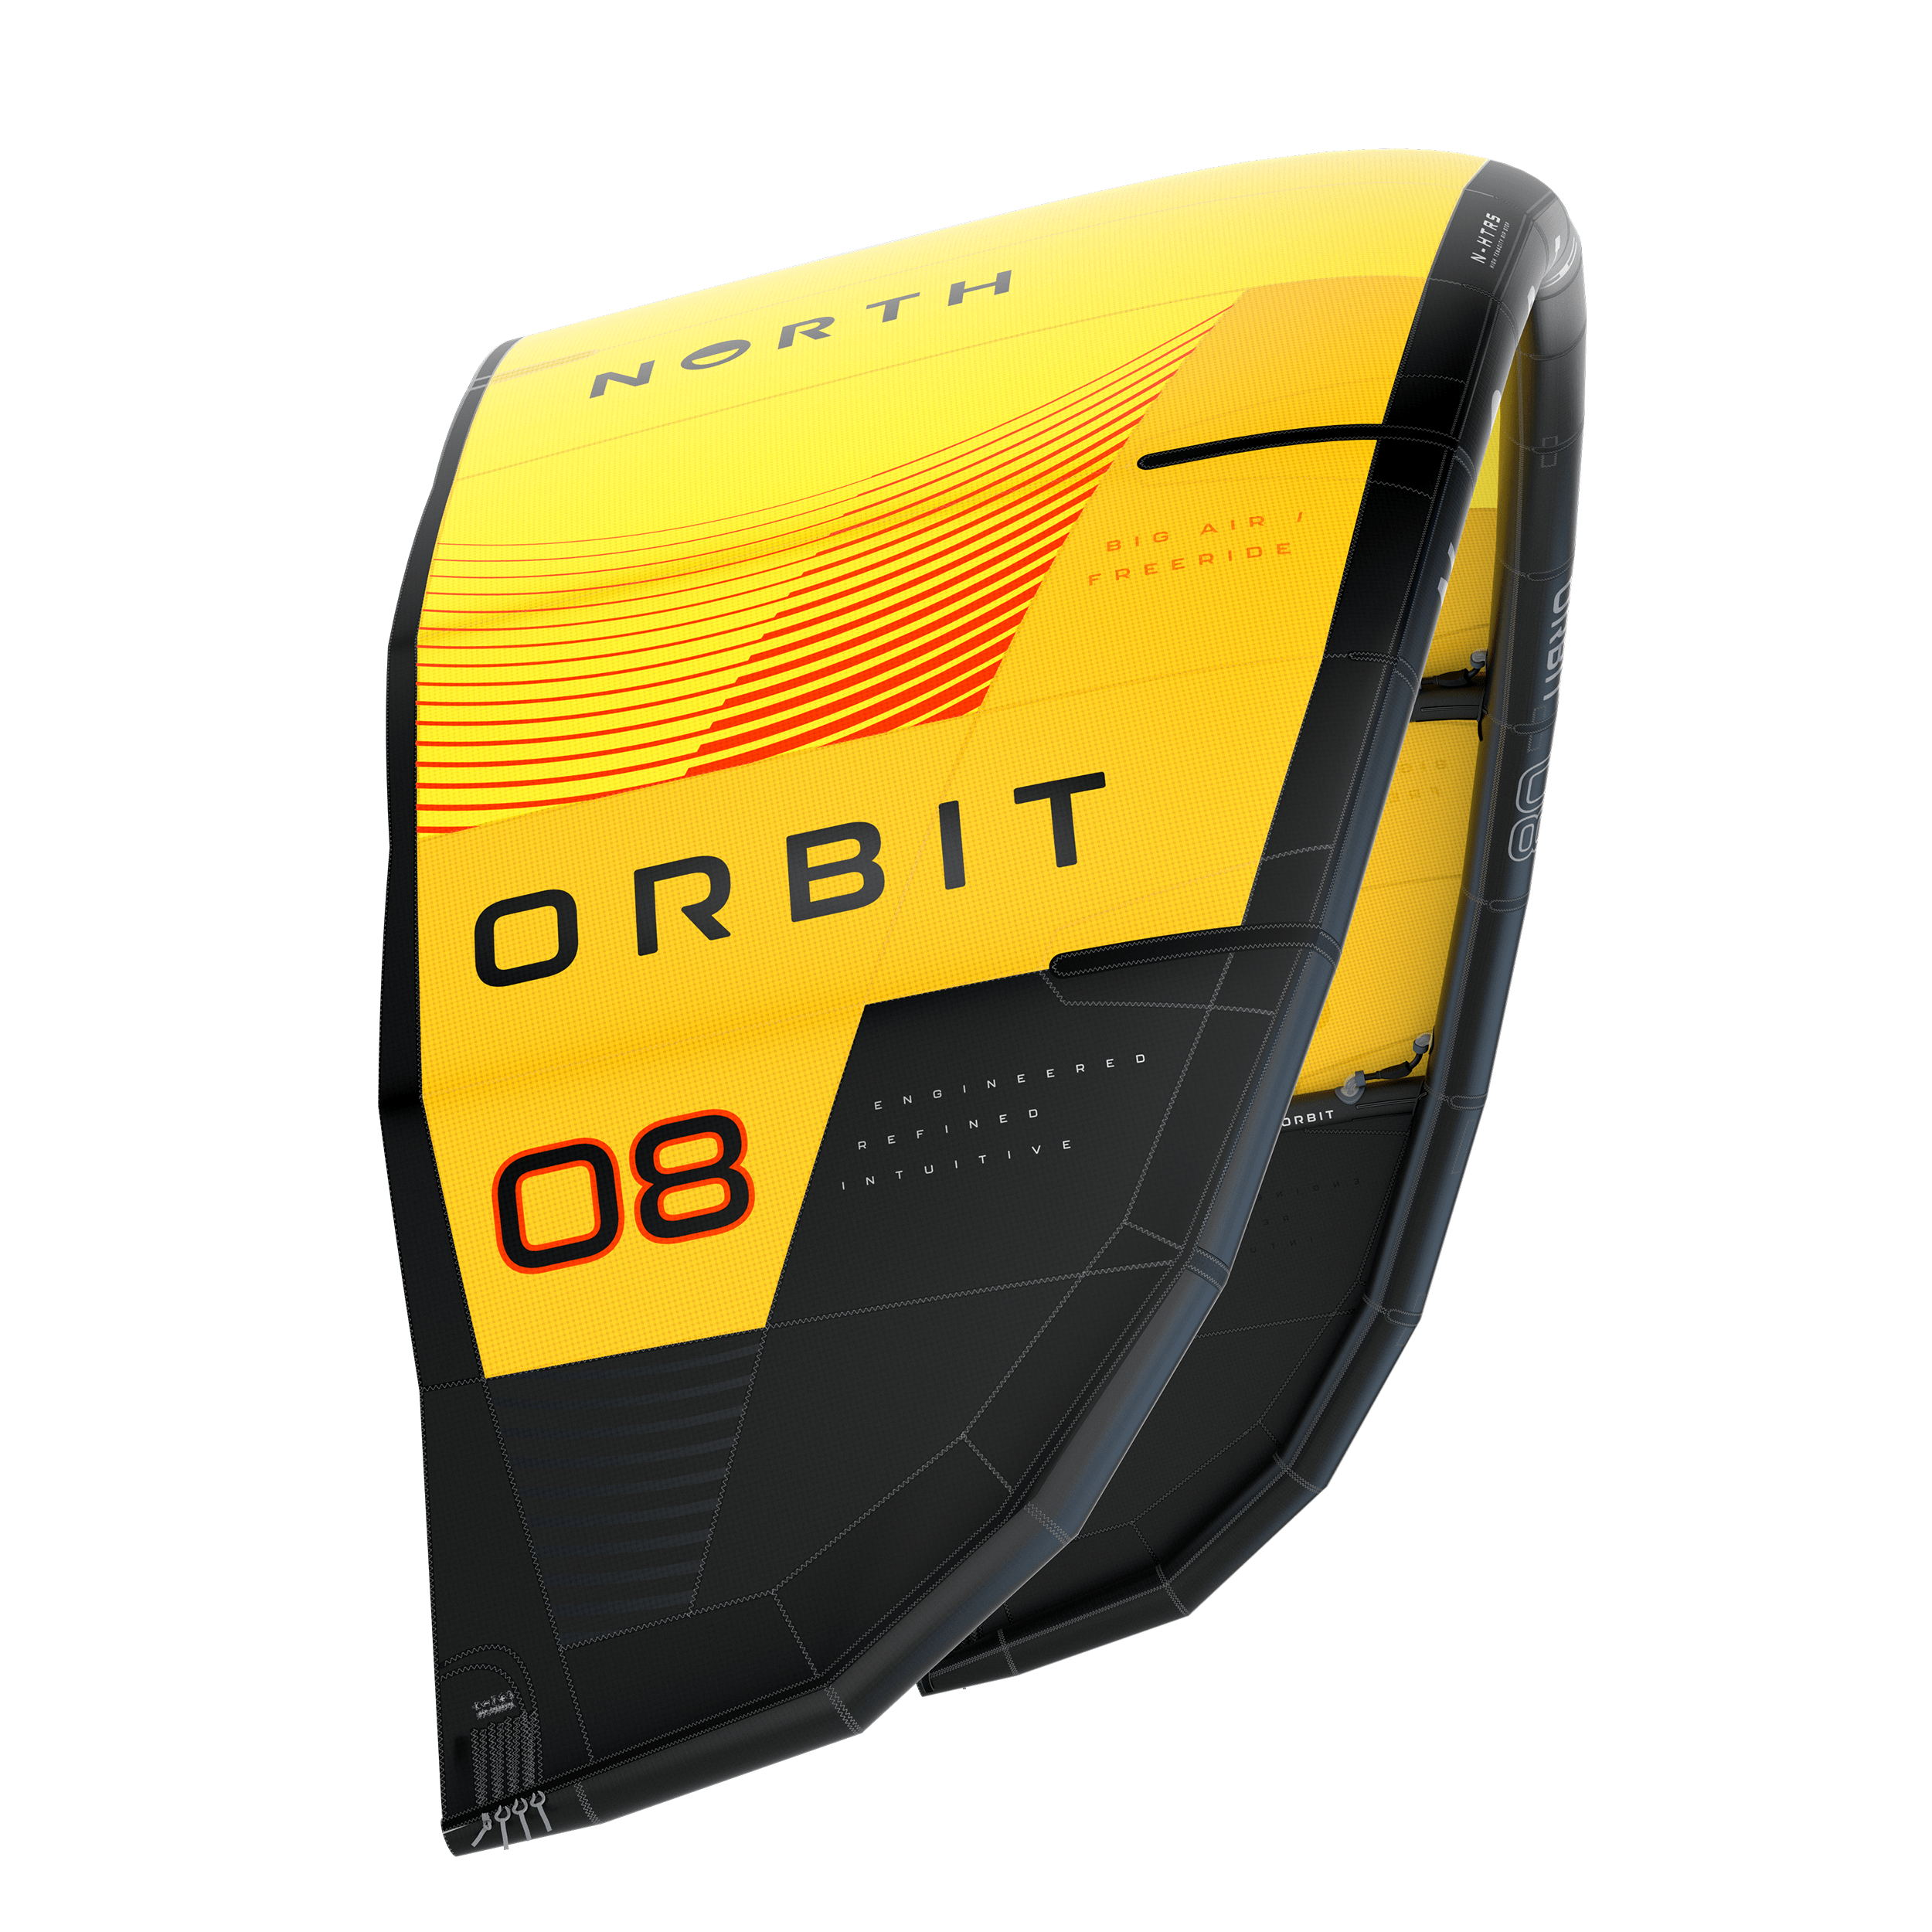 North Orbit 2024 Kite